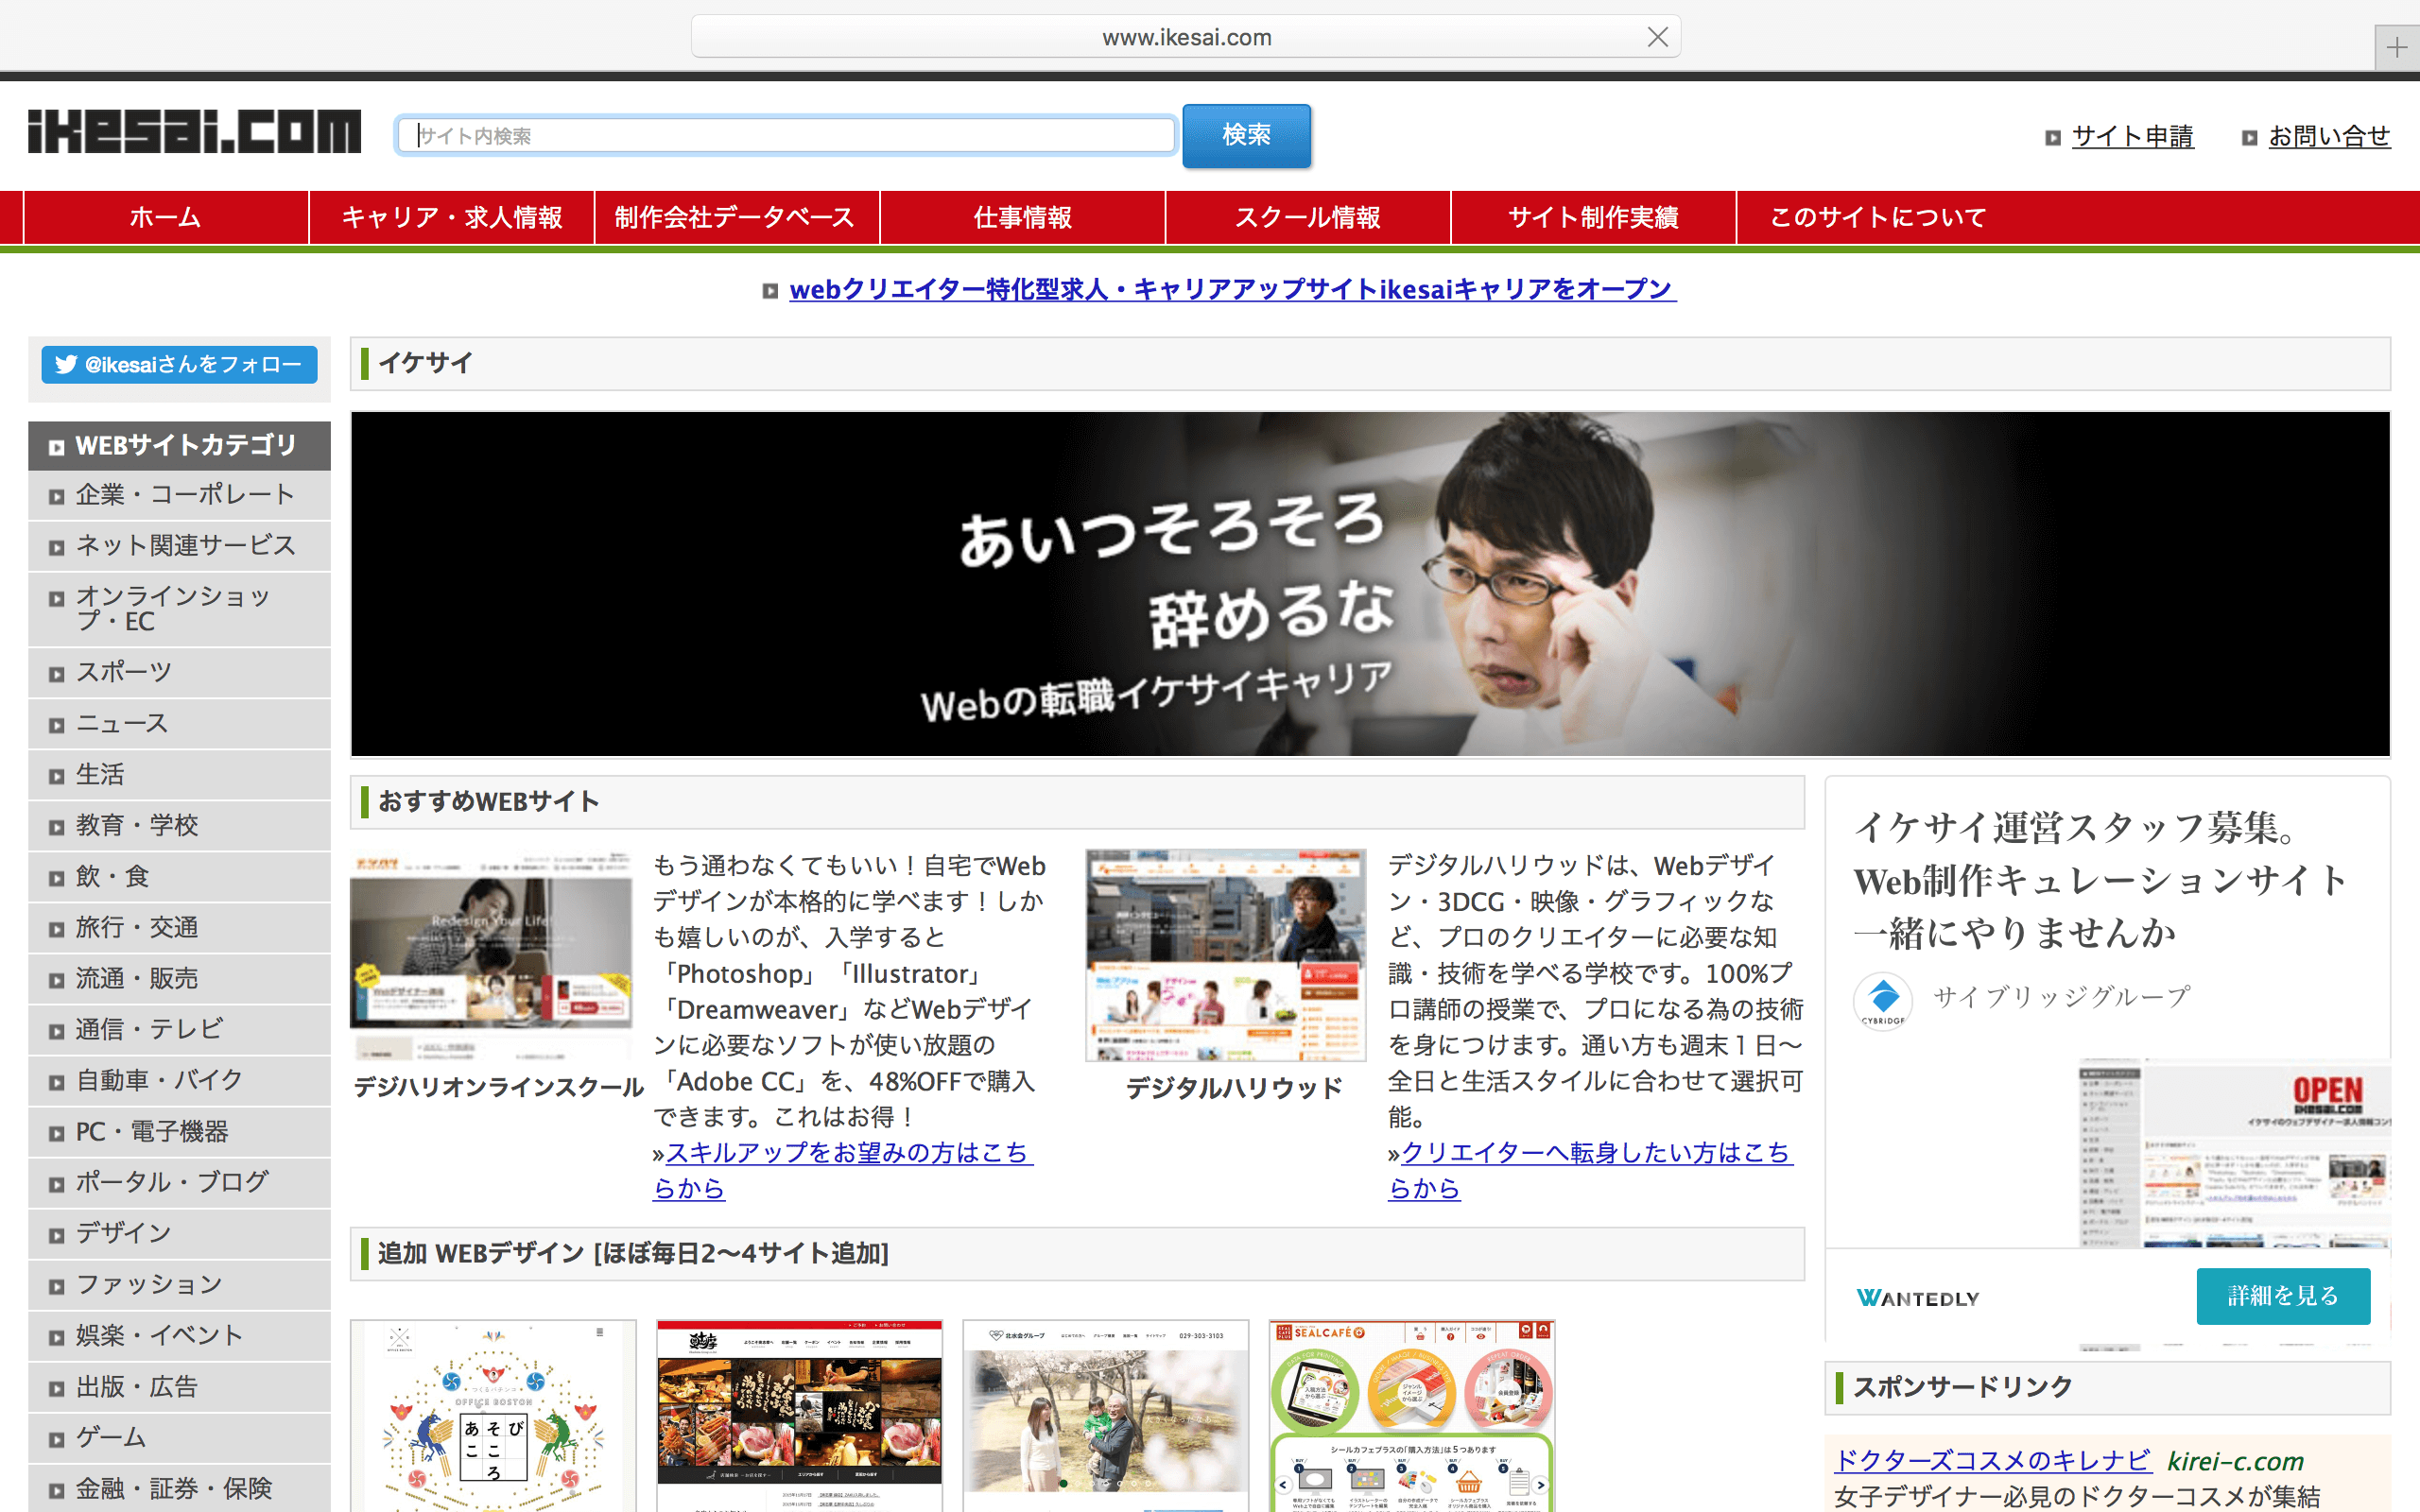 Web Design Gallery : ikesai